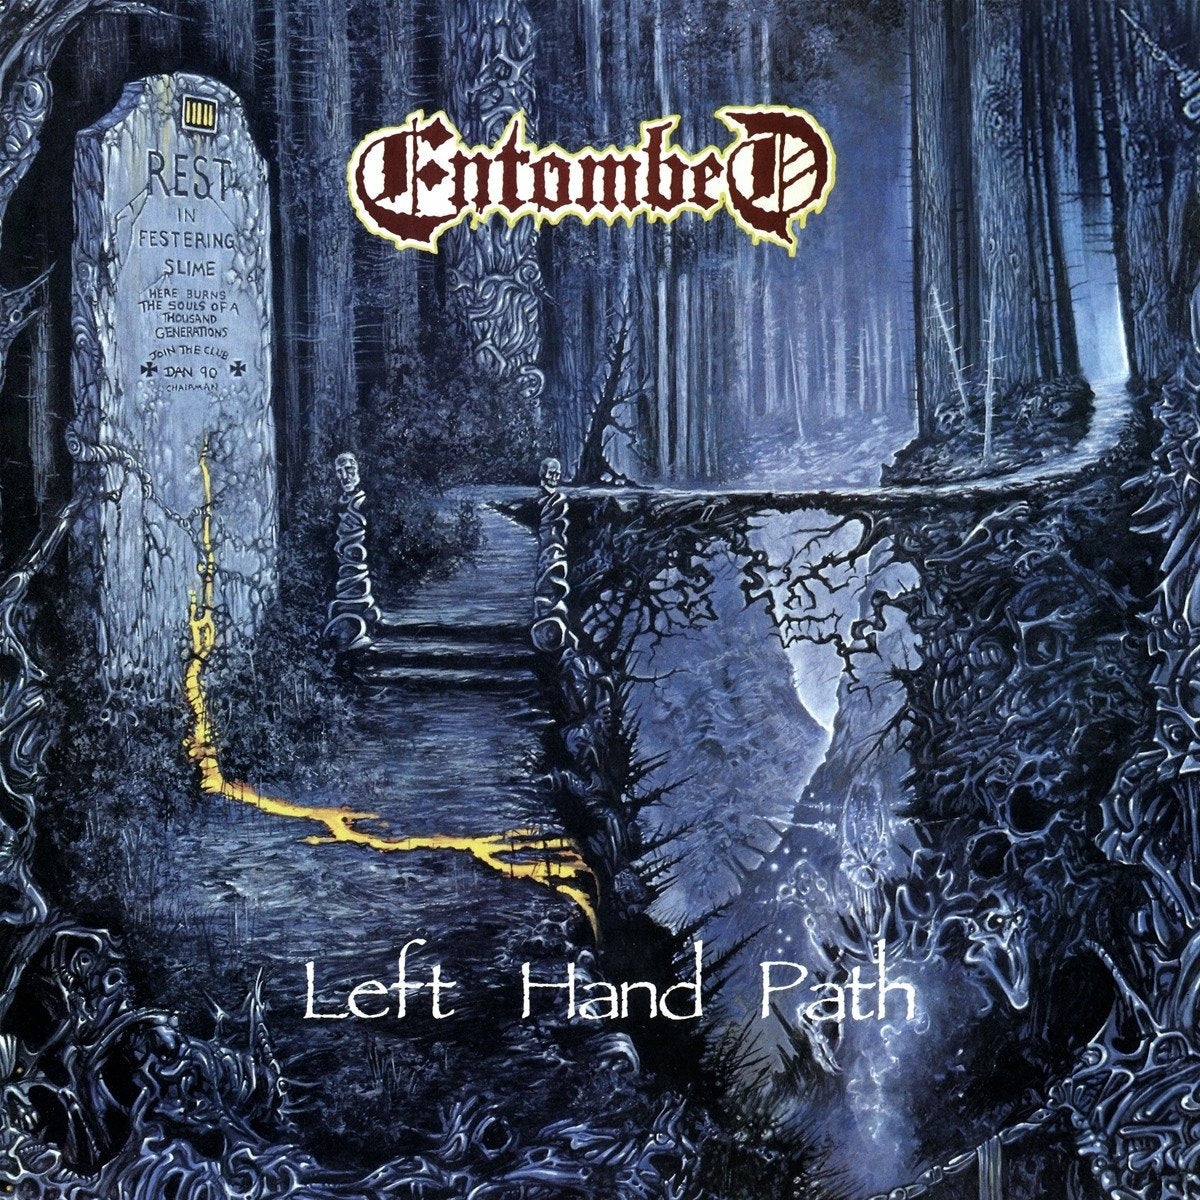 ENTOMBED "Left Hand Path" LP